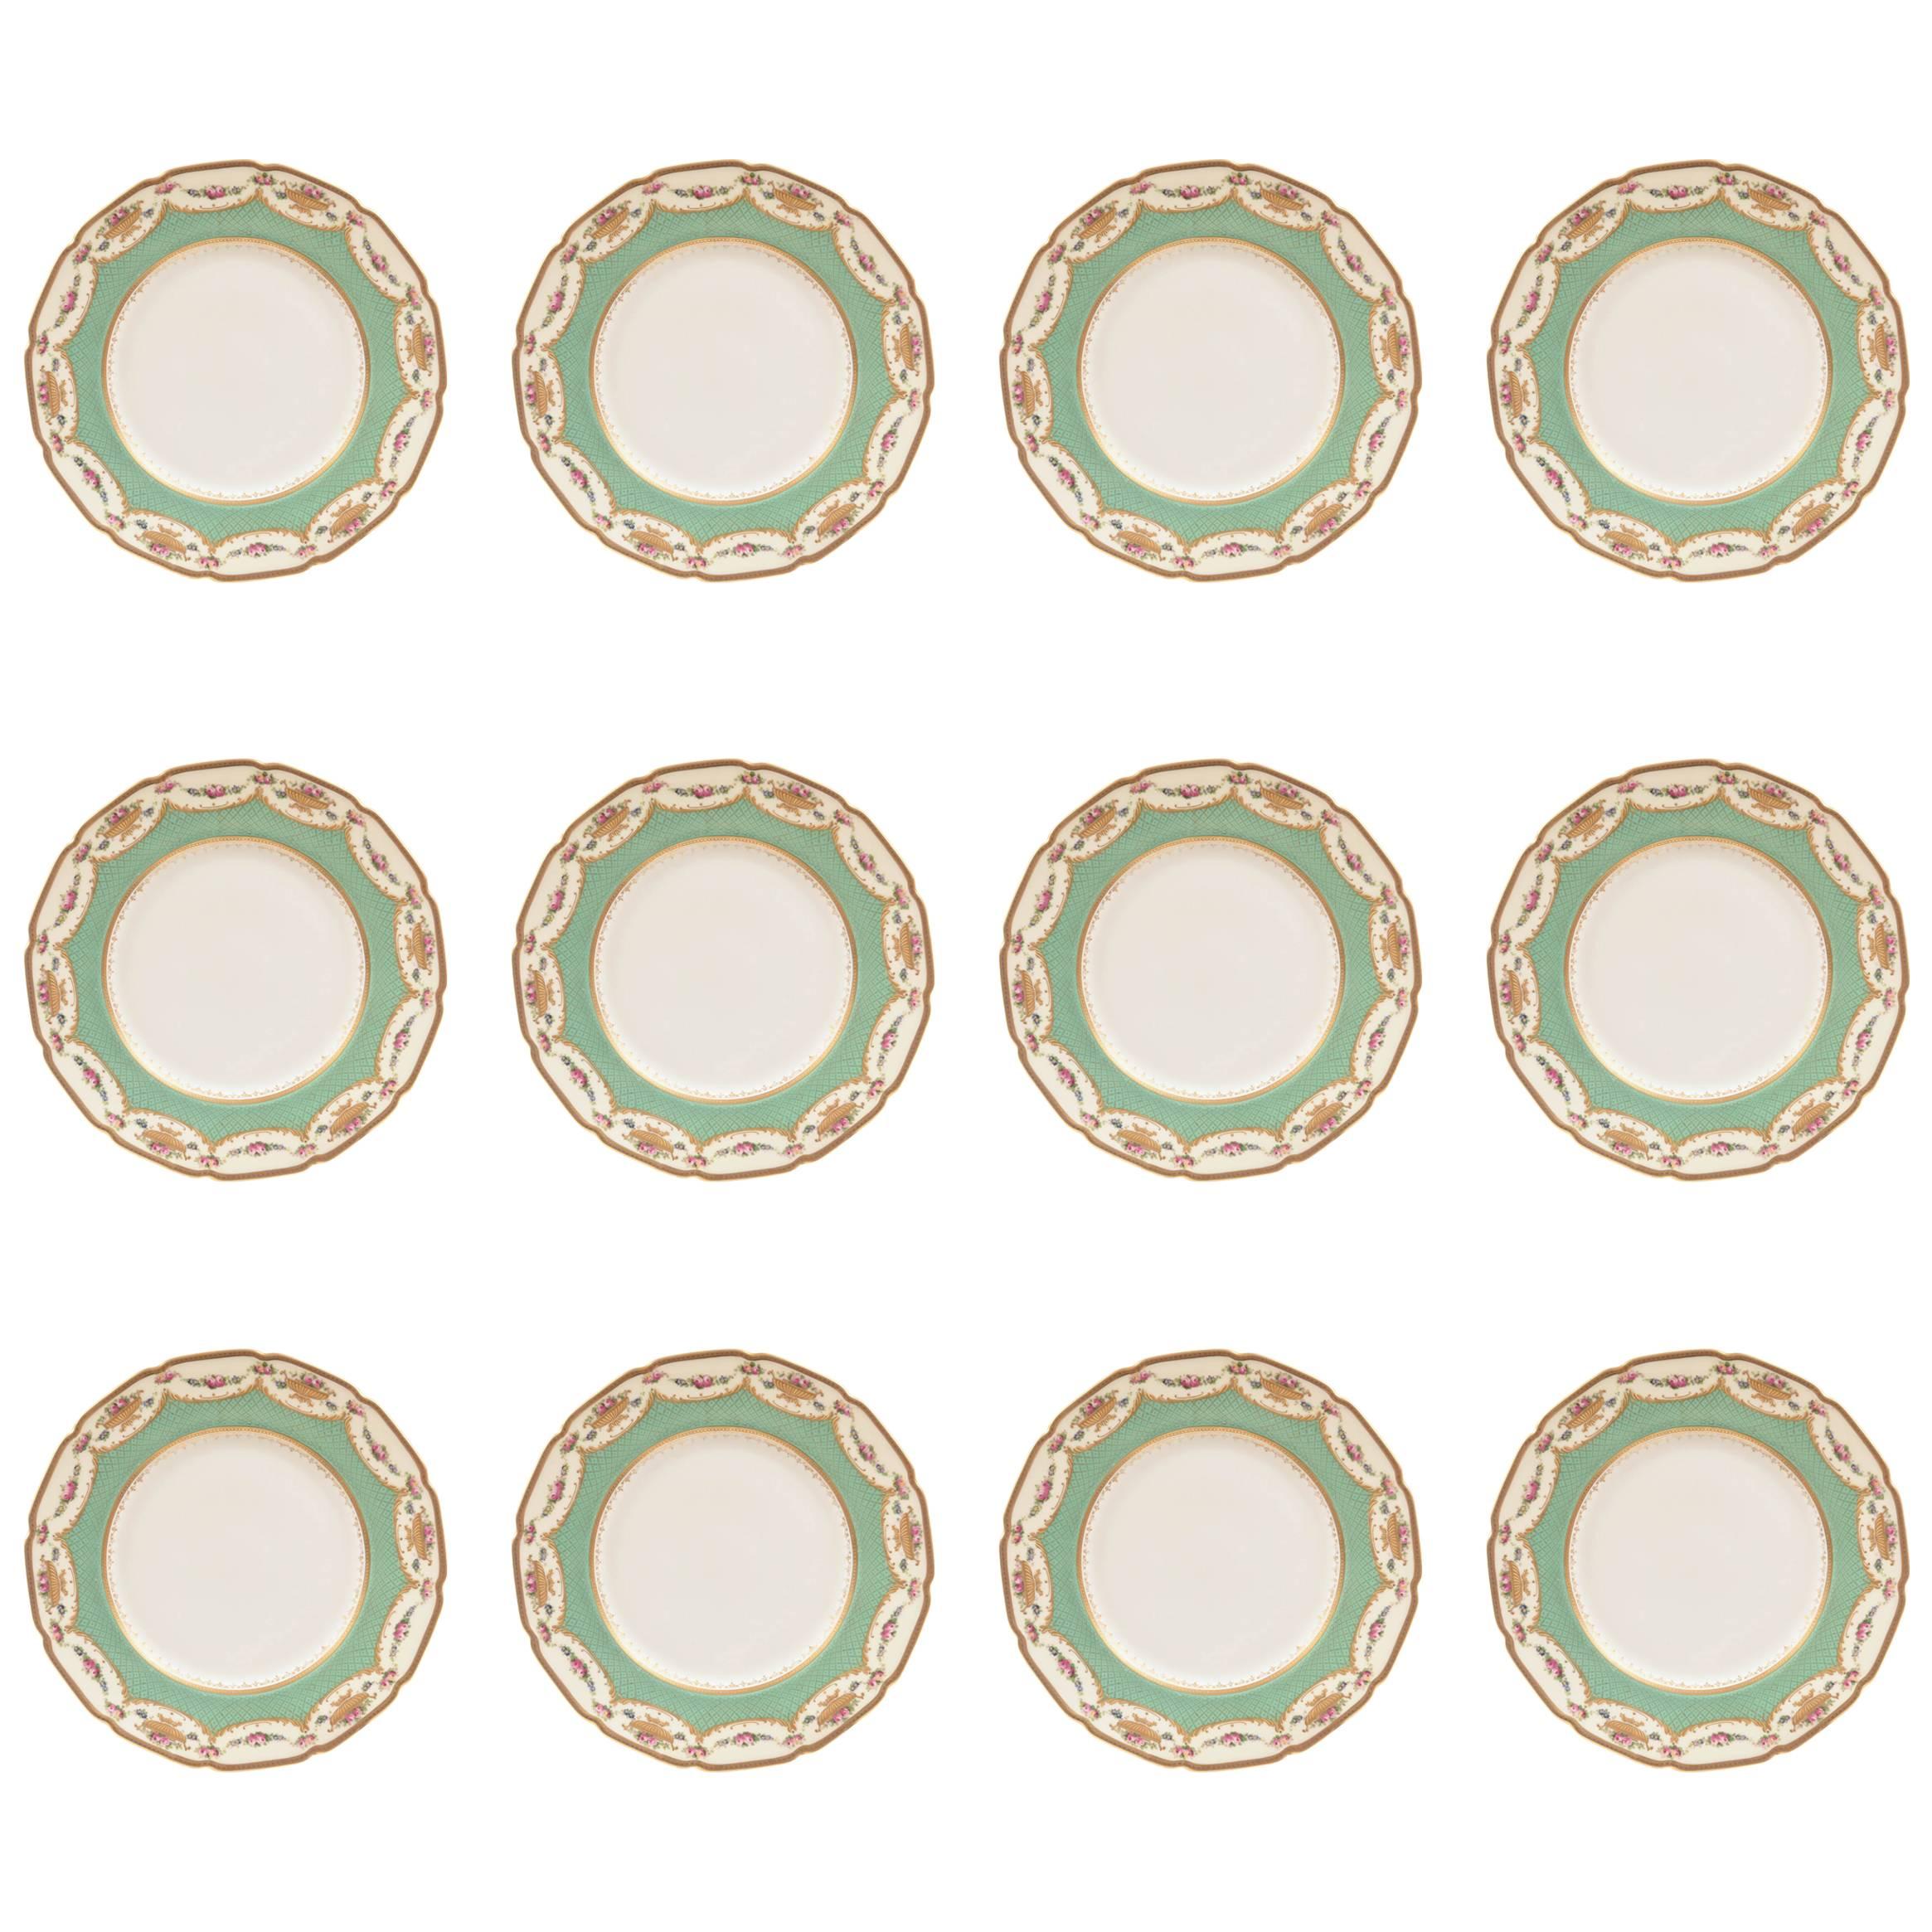 12 Antique Dinner Plates, Royal Doulton England, Nice Shape, Soft Green & Gilt